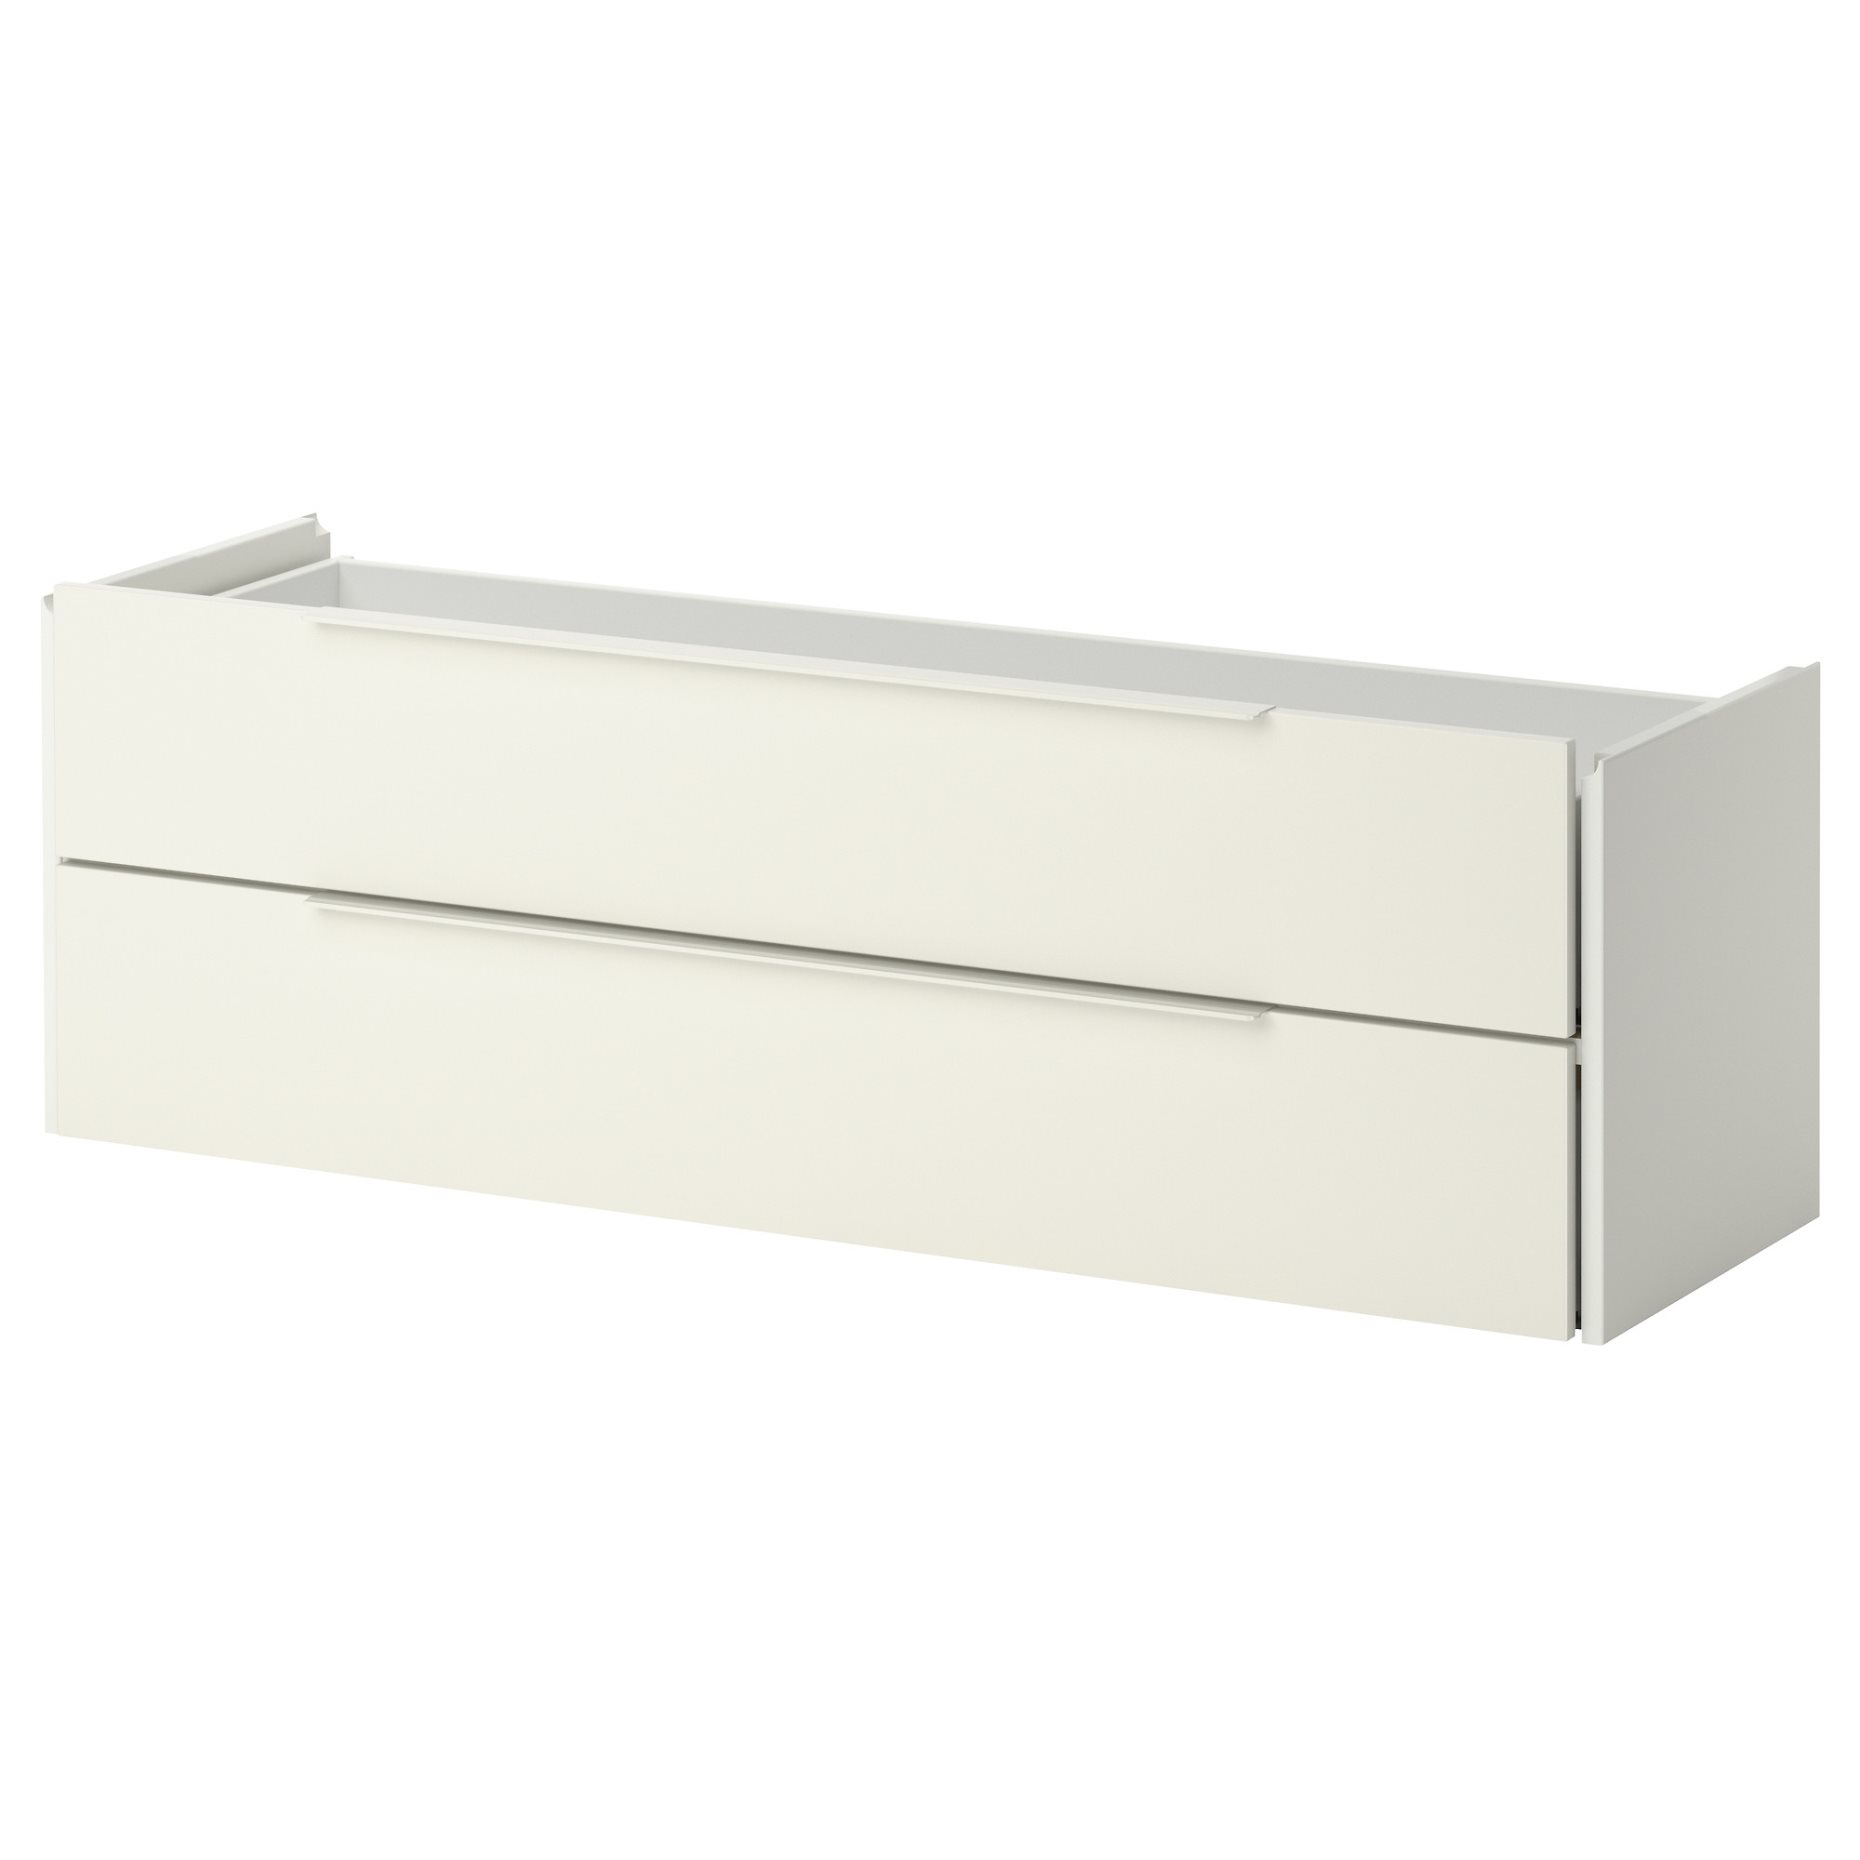 FJÄLKINGE, drawer unit with 2 drawers, 102.216.85